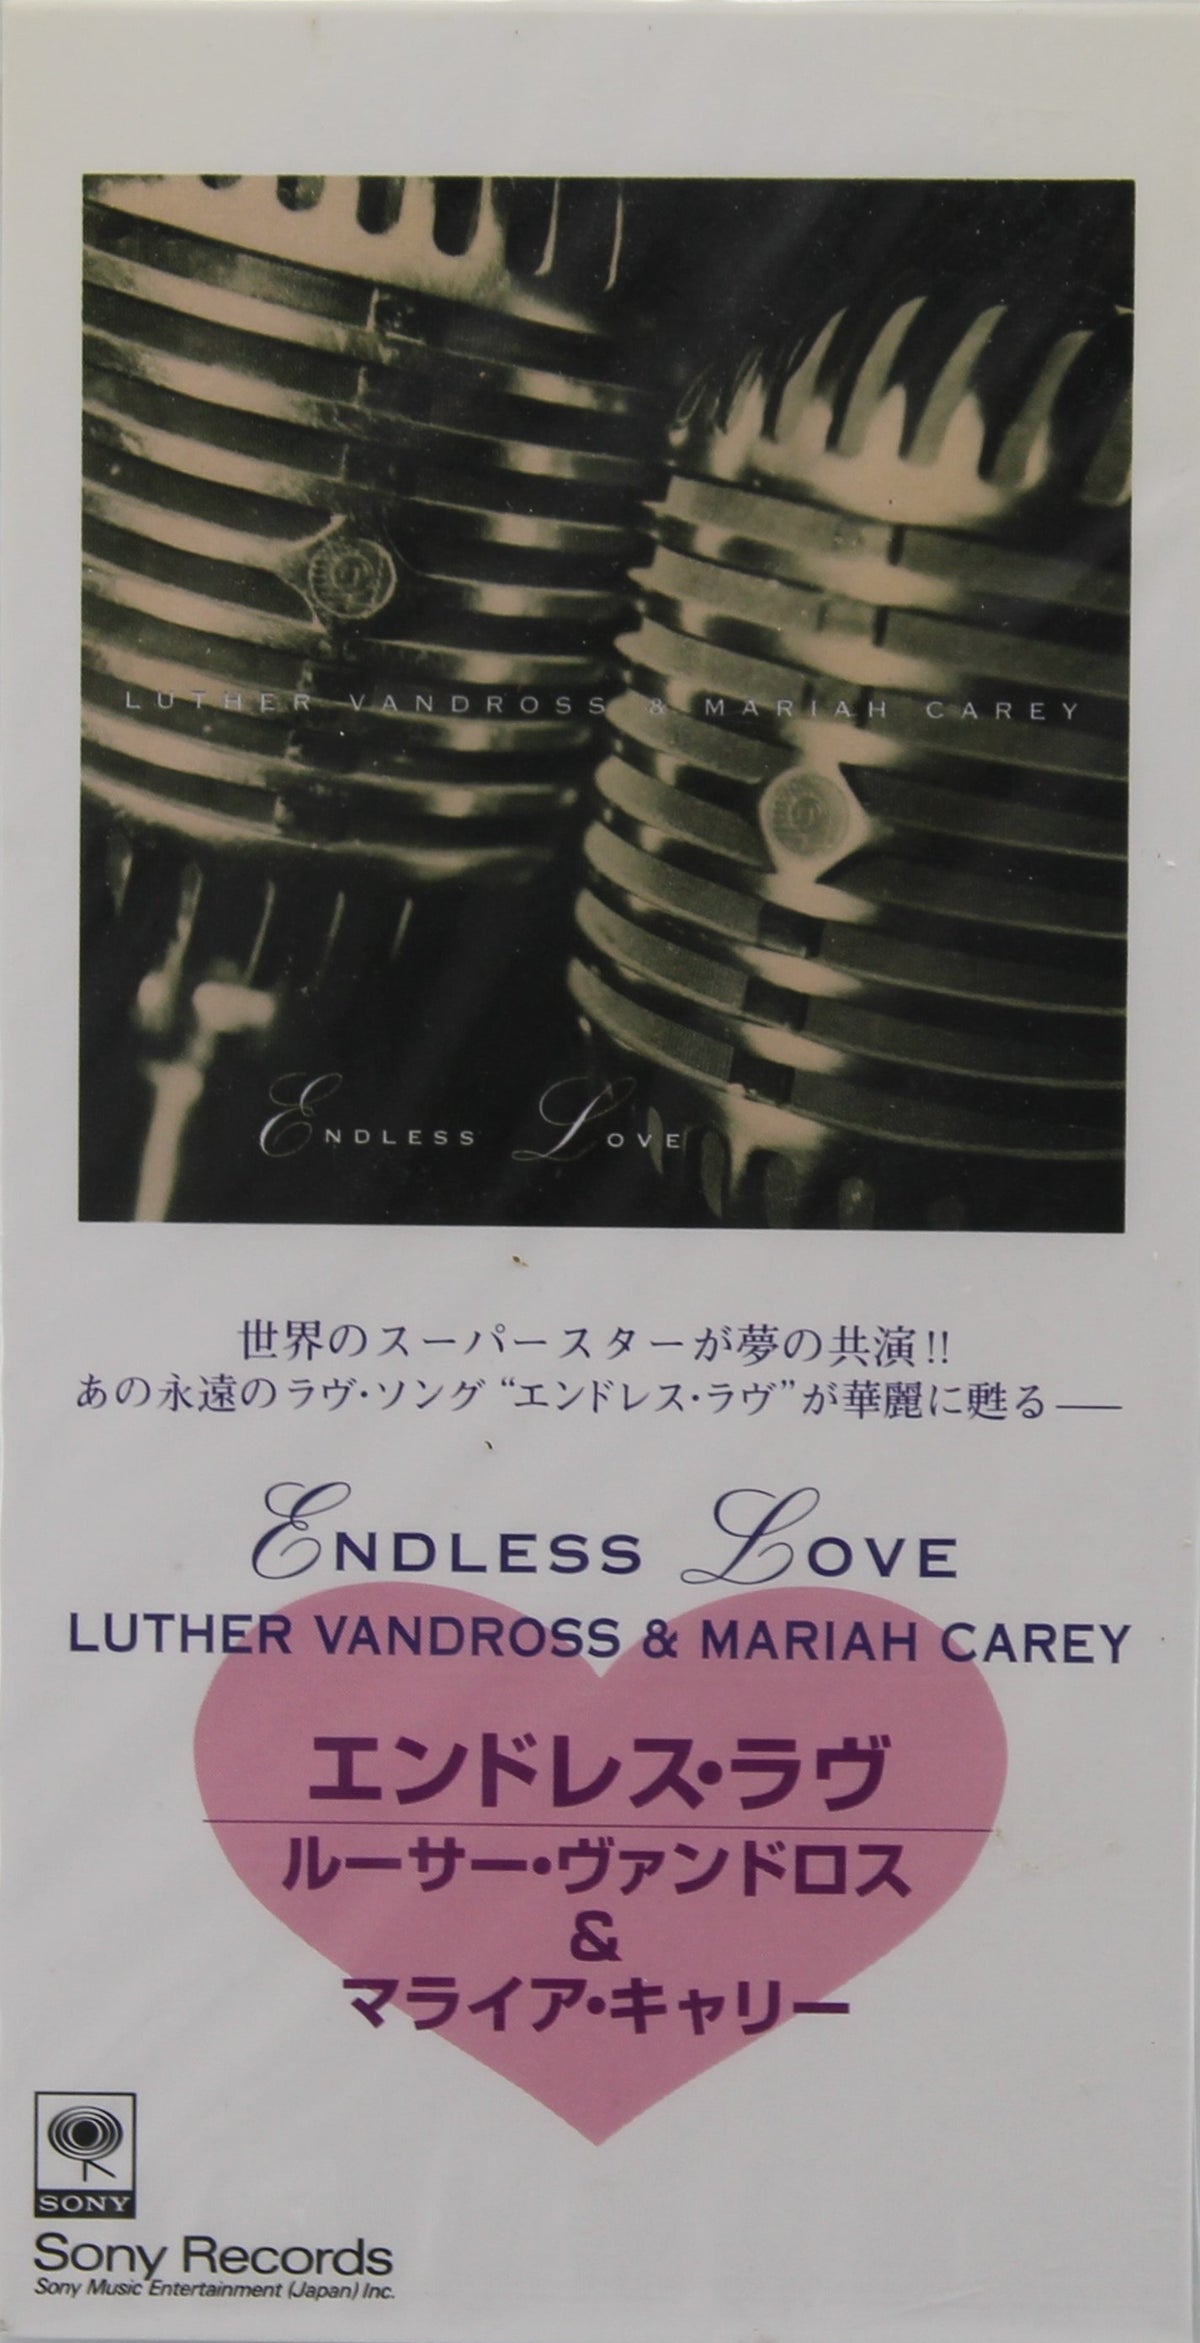 Luther Vandross &amp; Mariah Carey – Endless Love, CD, Mini, Single, Japan 1994